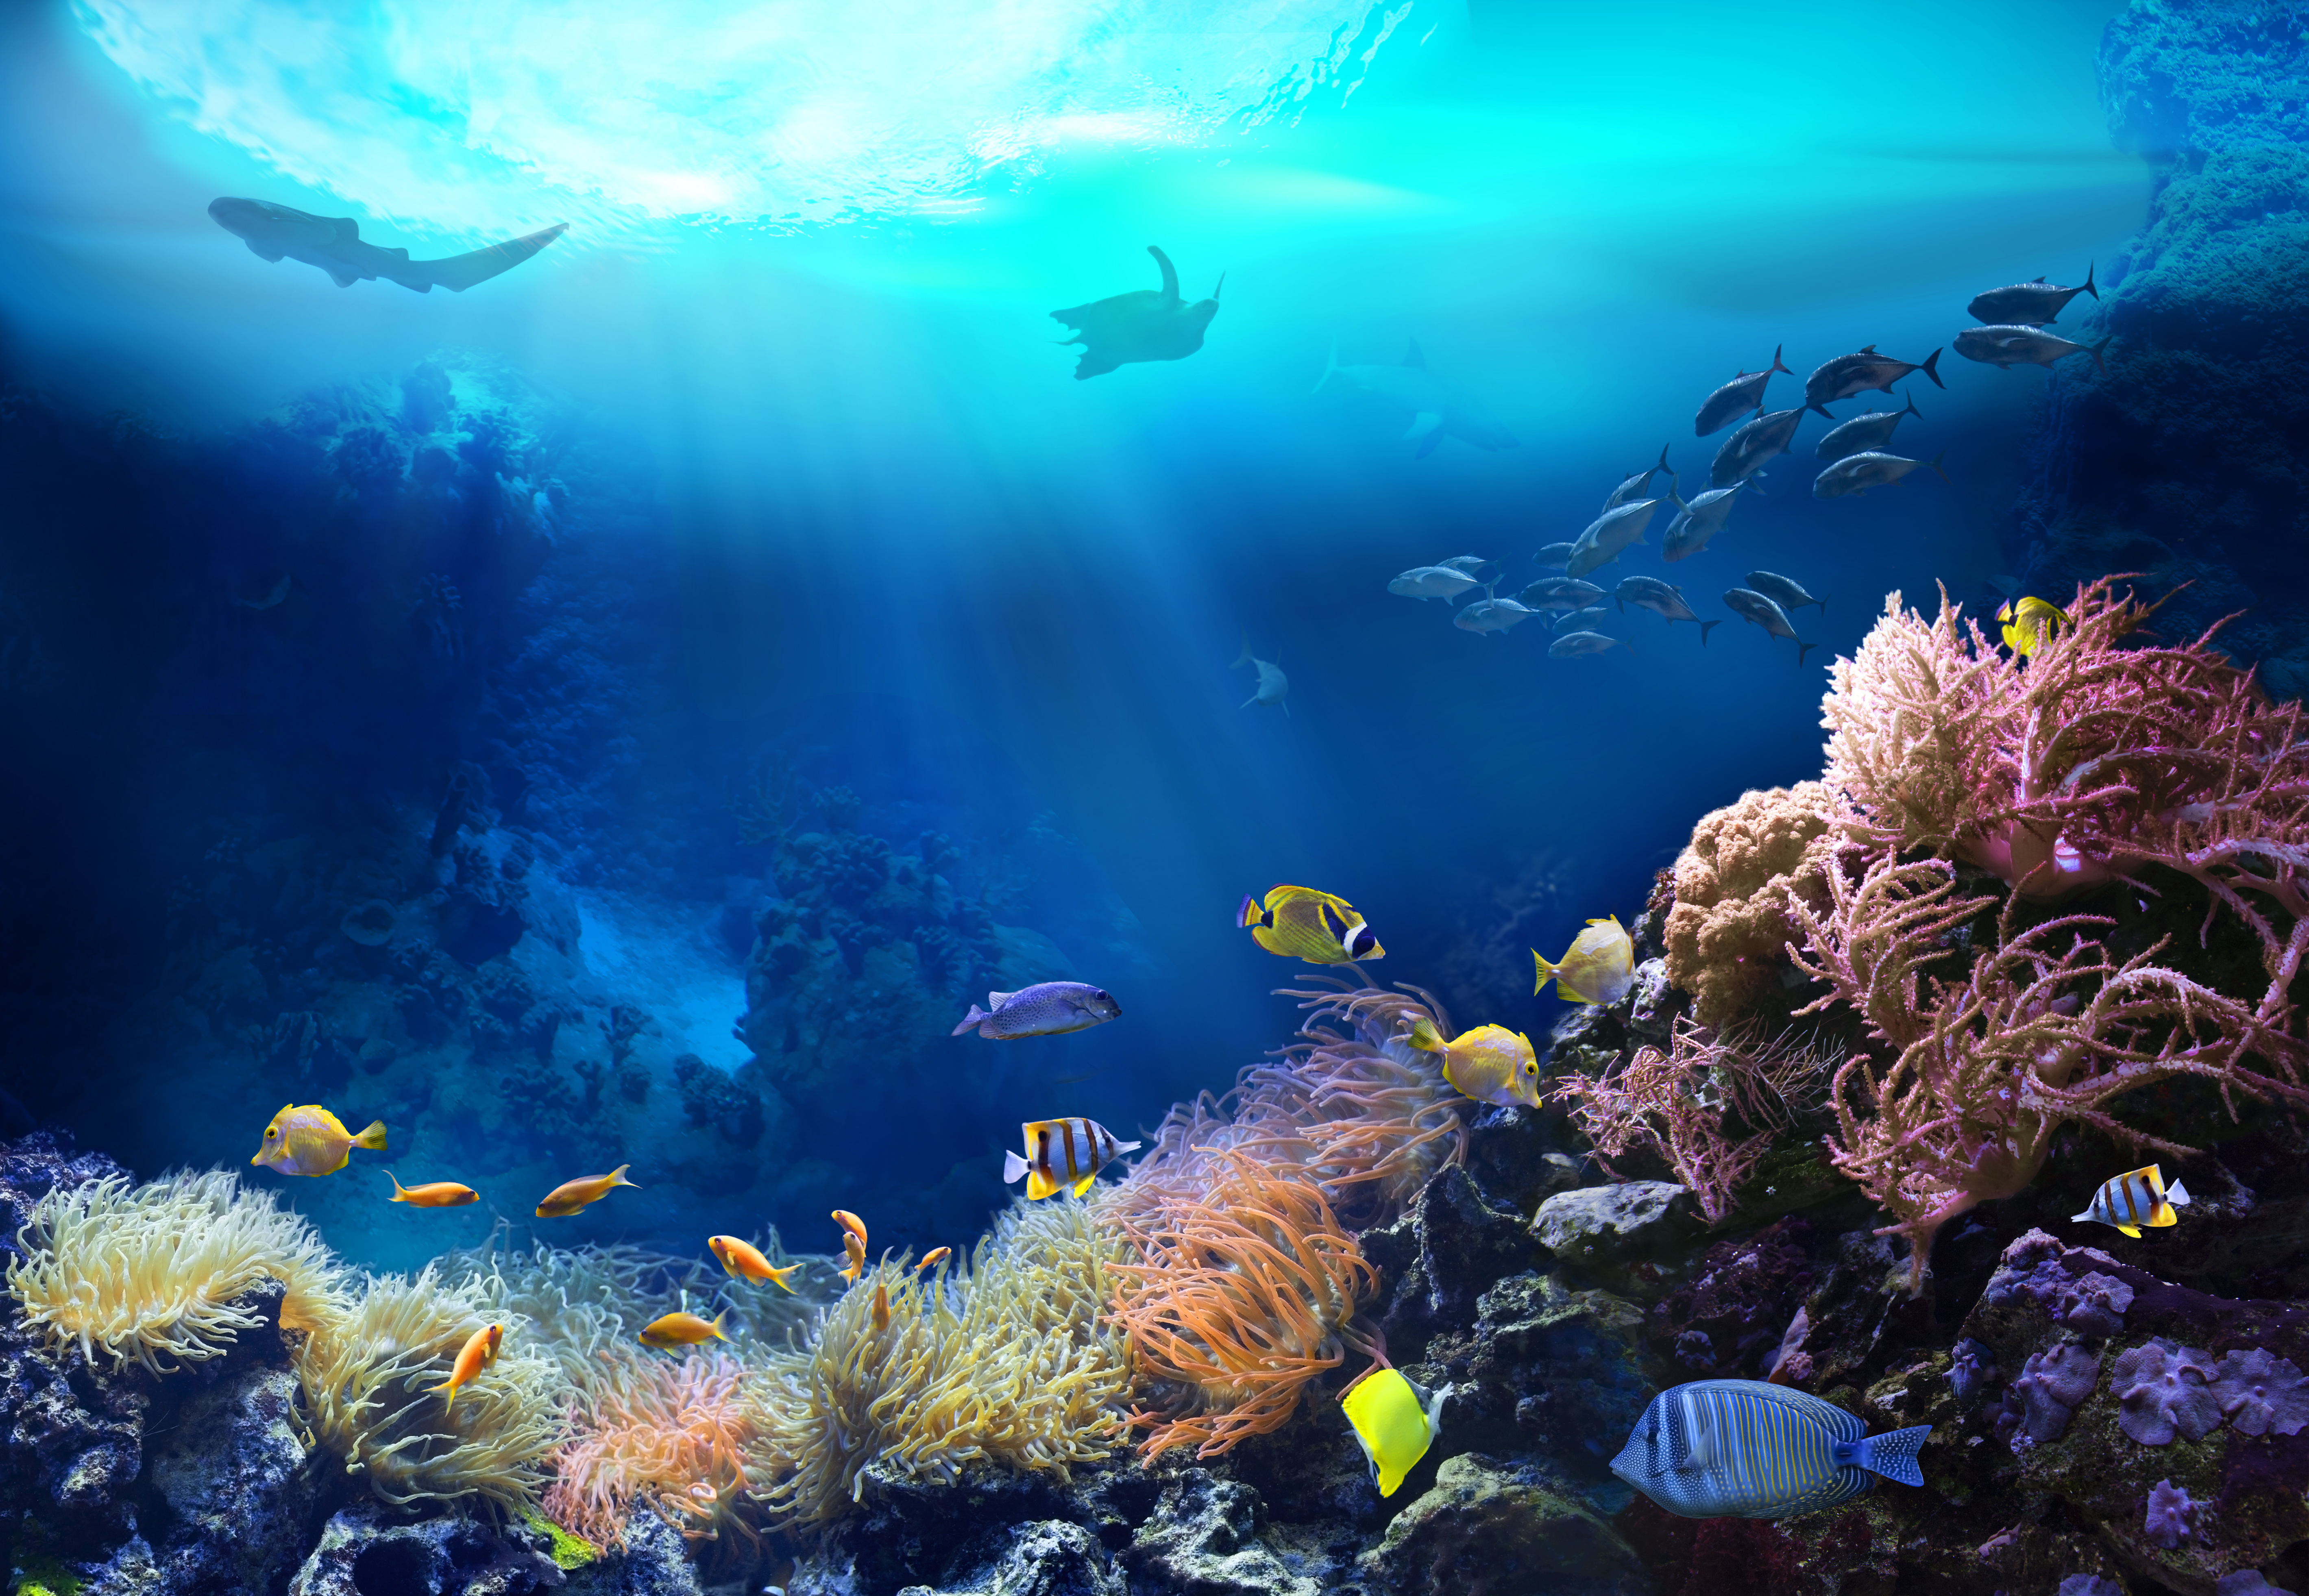 Undersea Image - Shutterstock